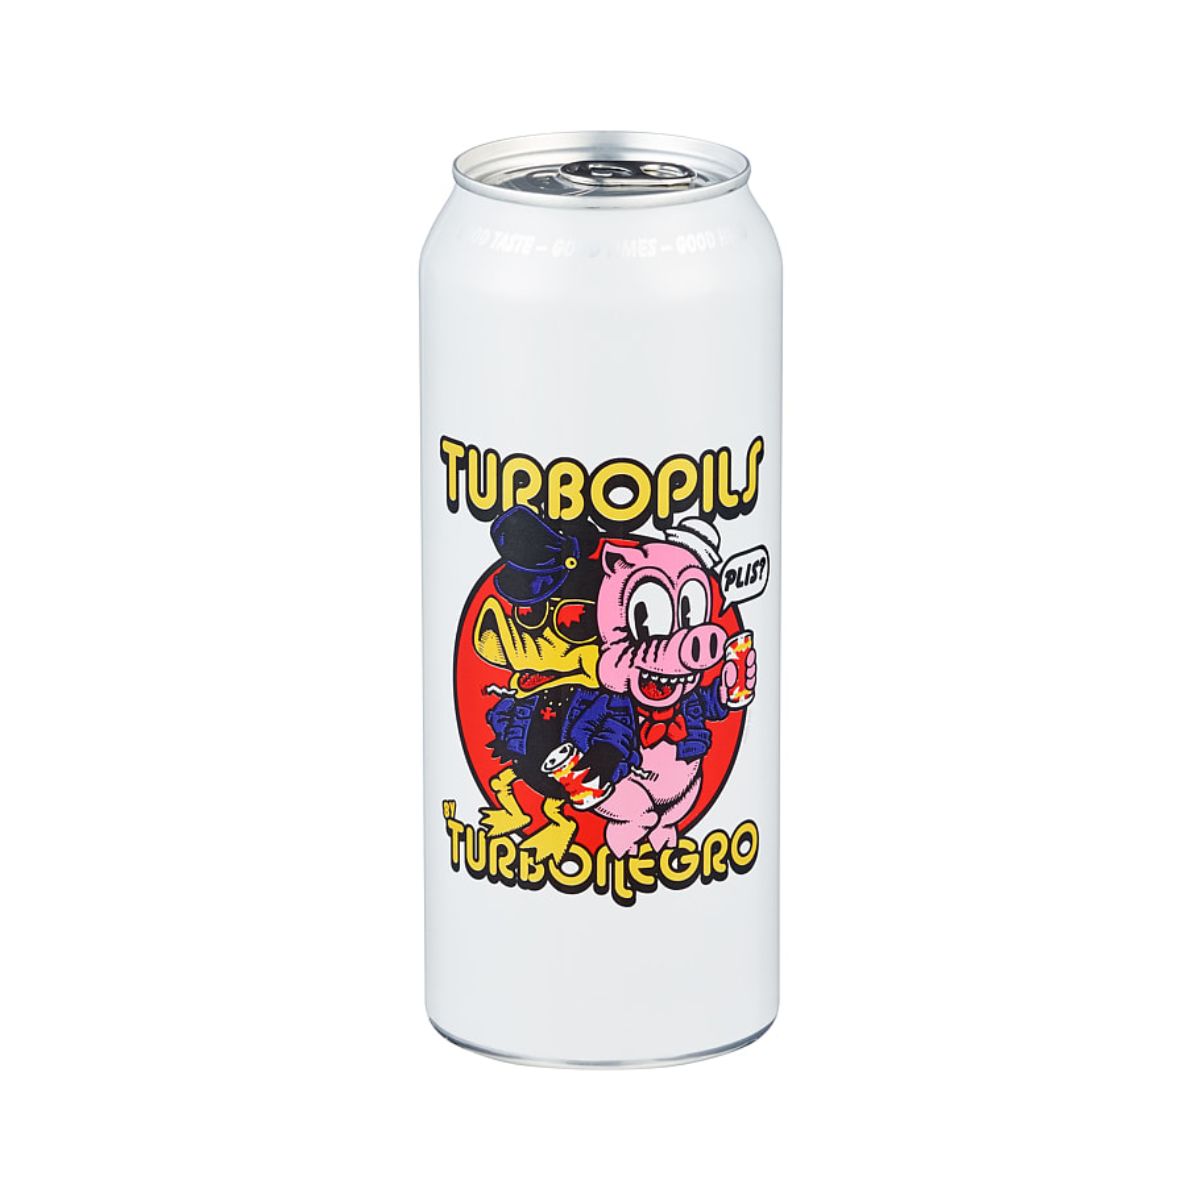 Turbopils by Turbonegro 0.5l bx